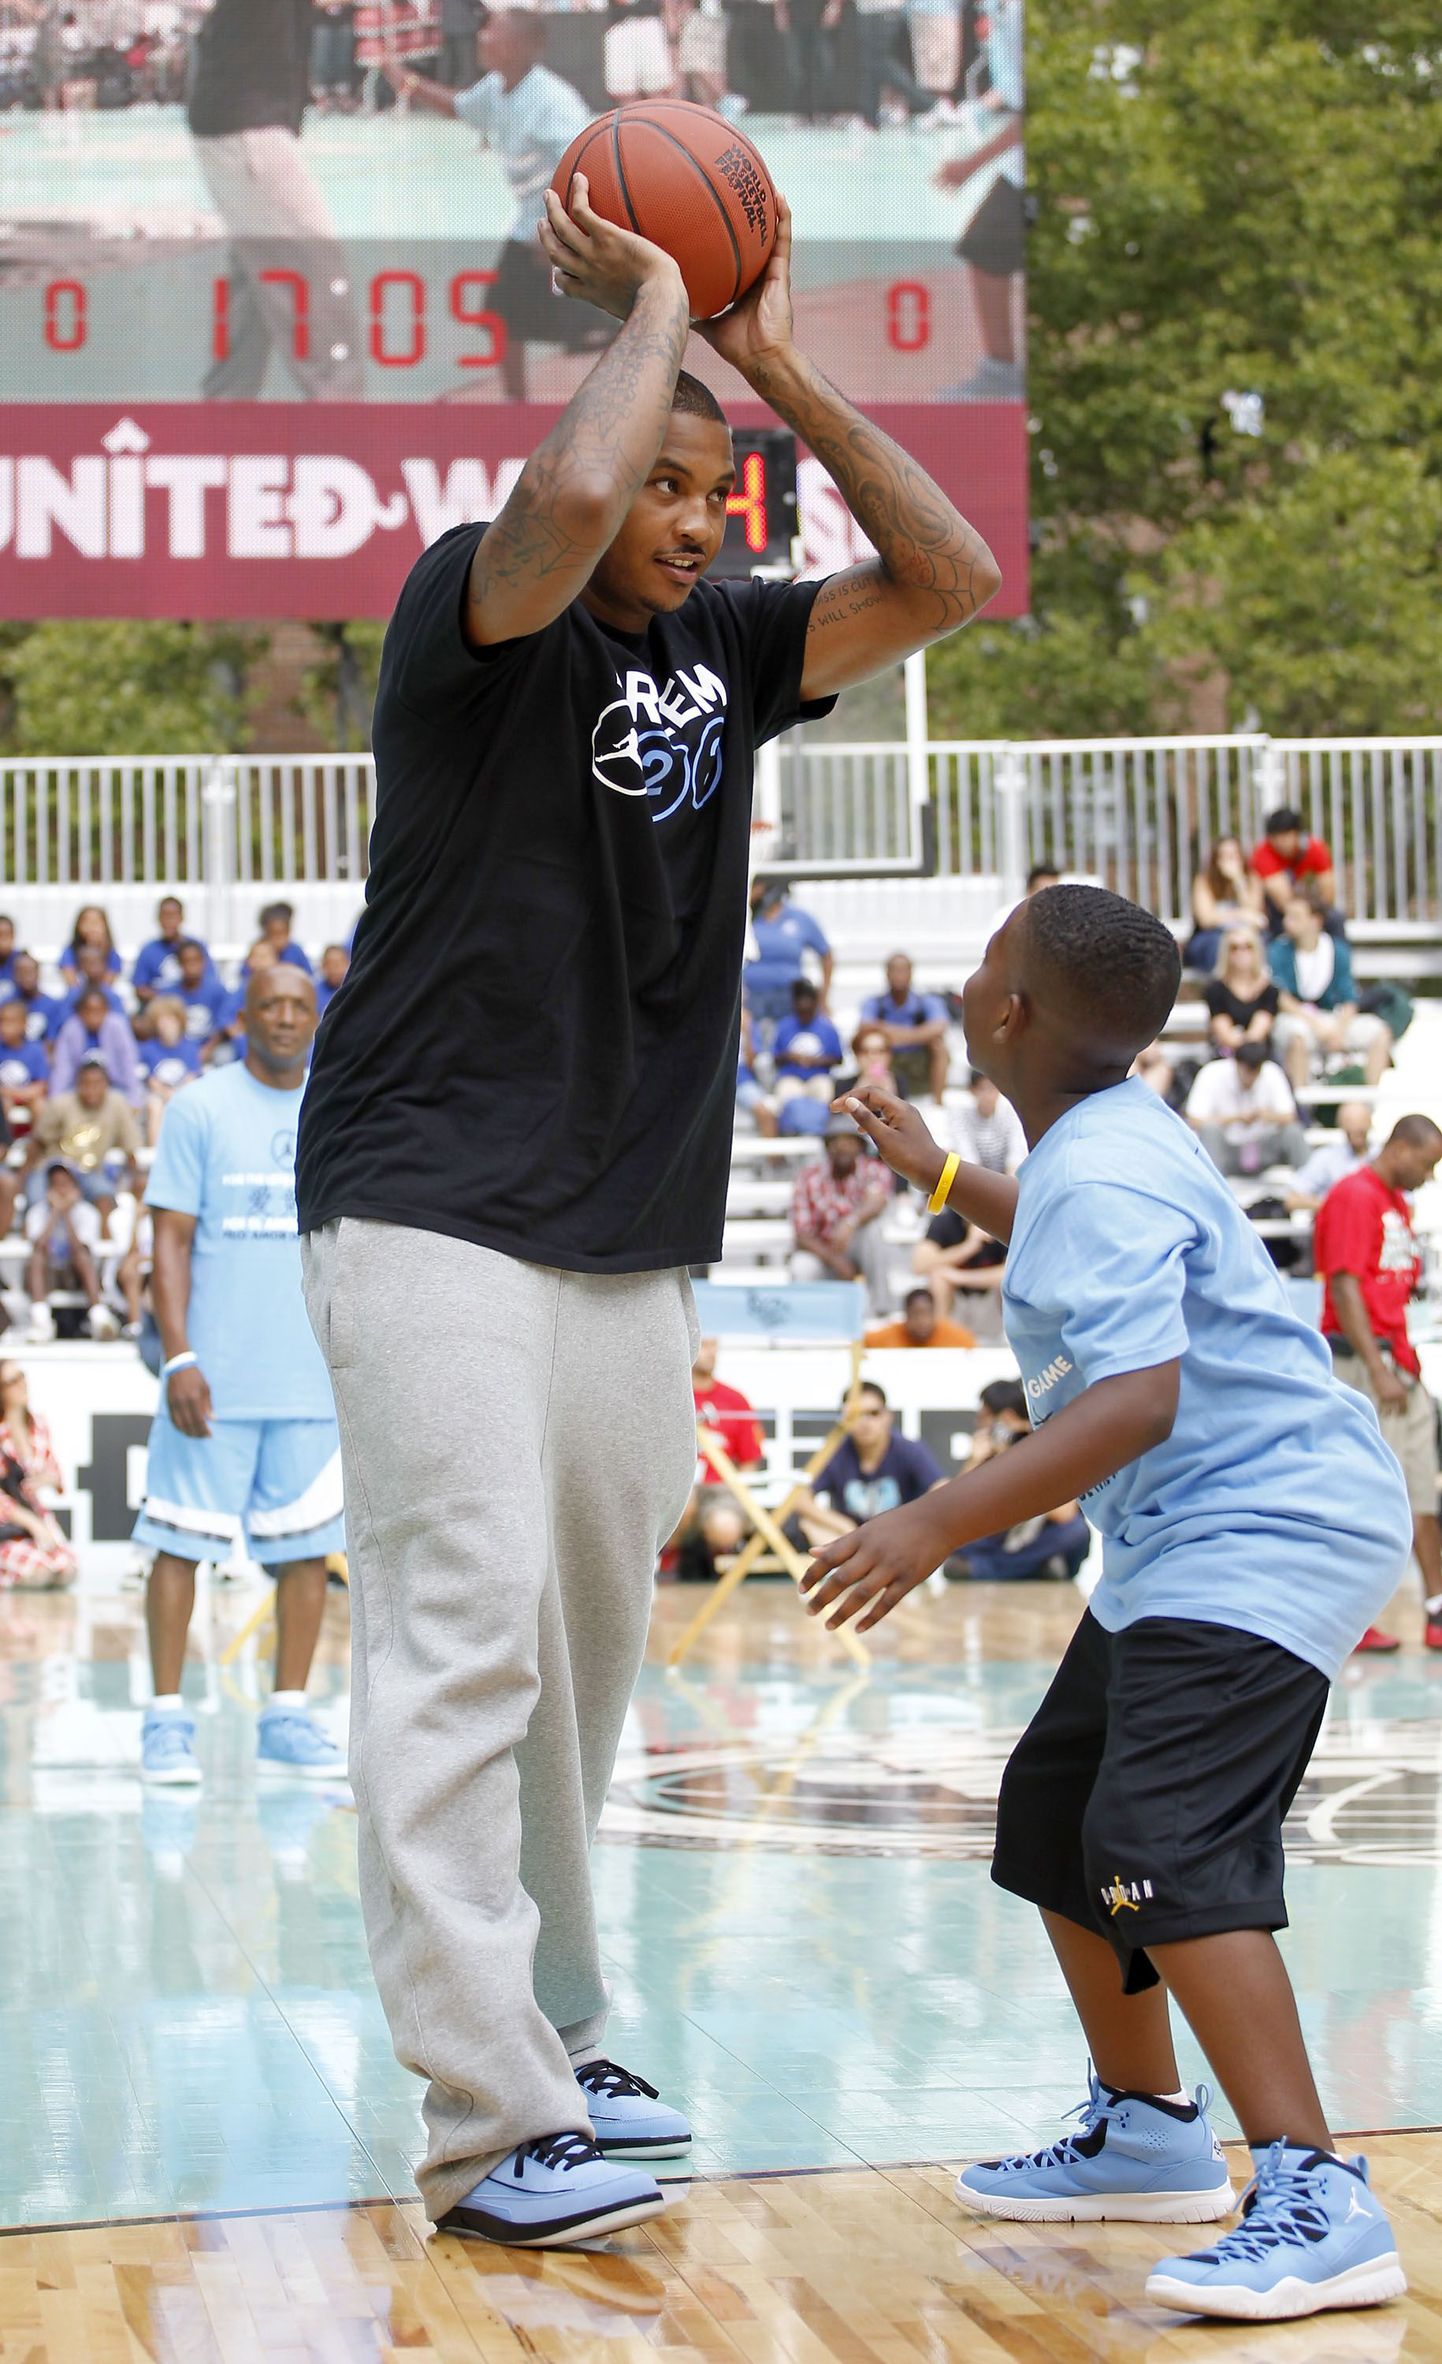 Carmelo Anthony (vasakul) noortele oma teadmisi jagamas.